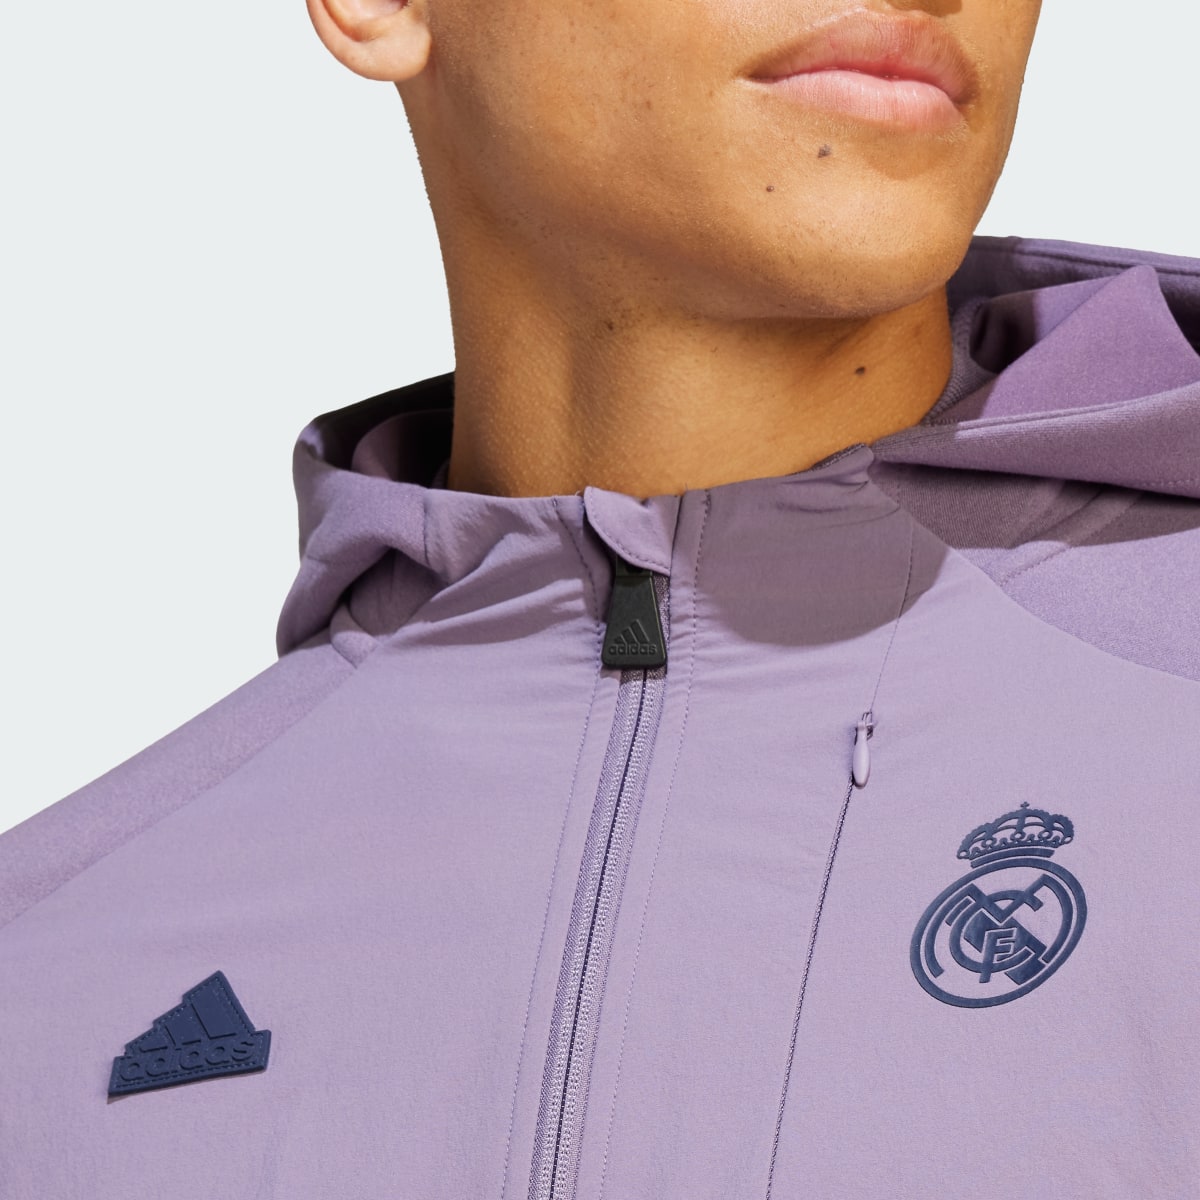 Adidas Sudadera con Gorro Real Madrid Designed for Gameday. 6